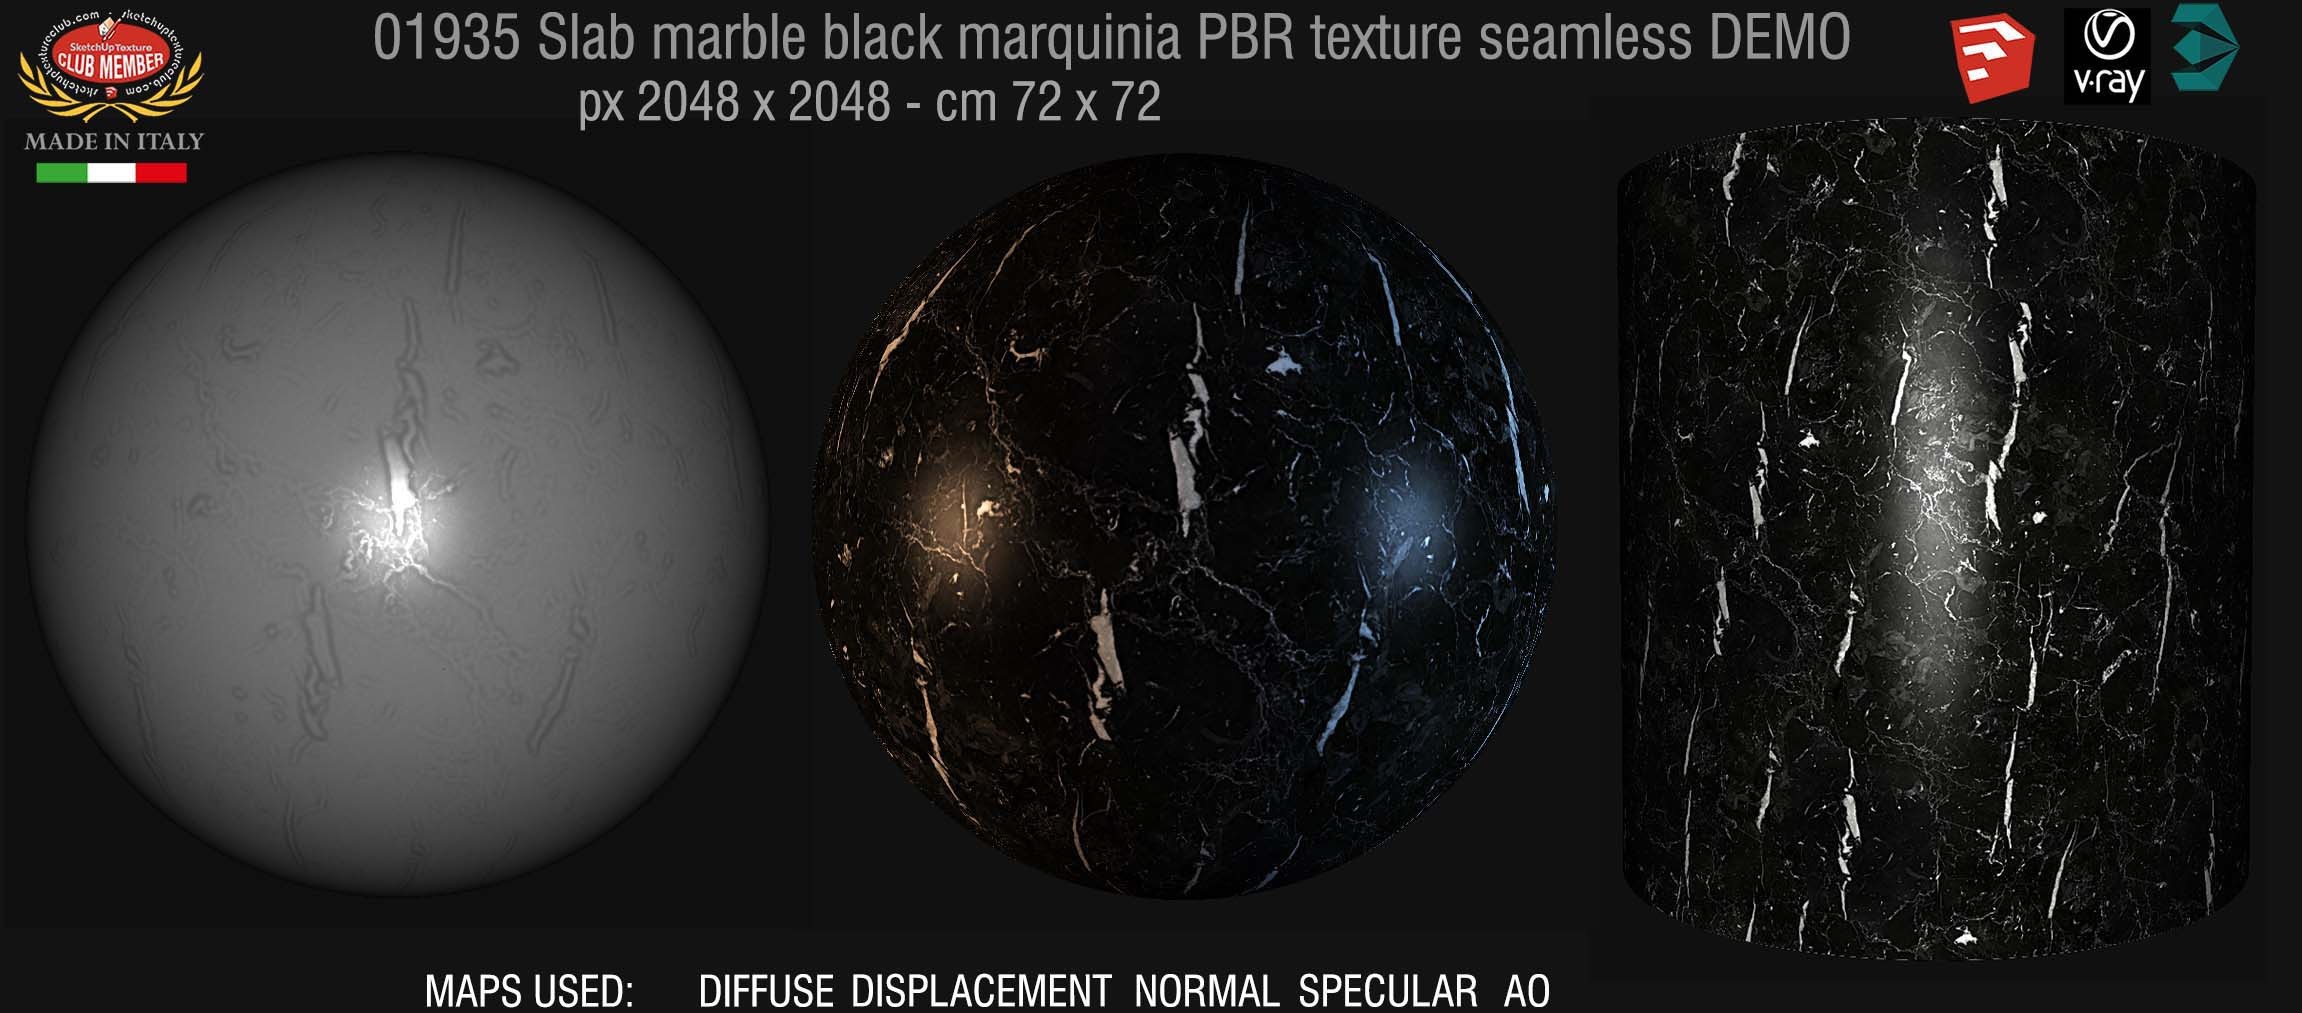 01935 slab marble black marquinia PBR texture seamless DEMO